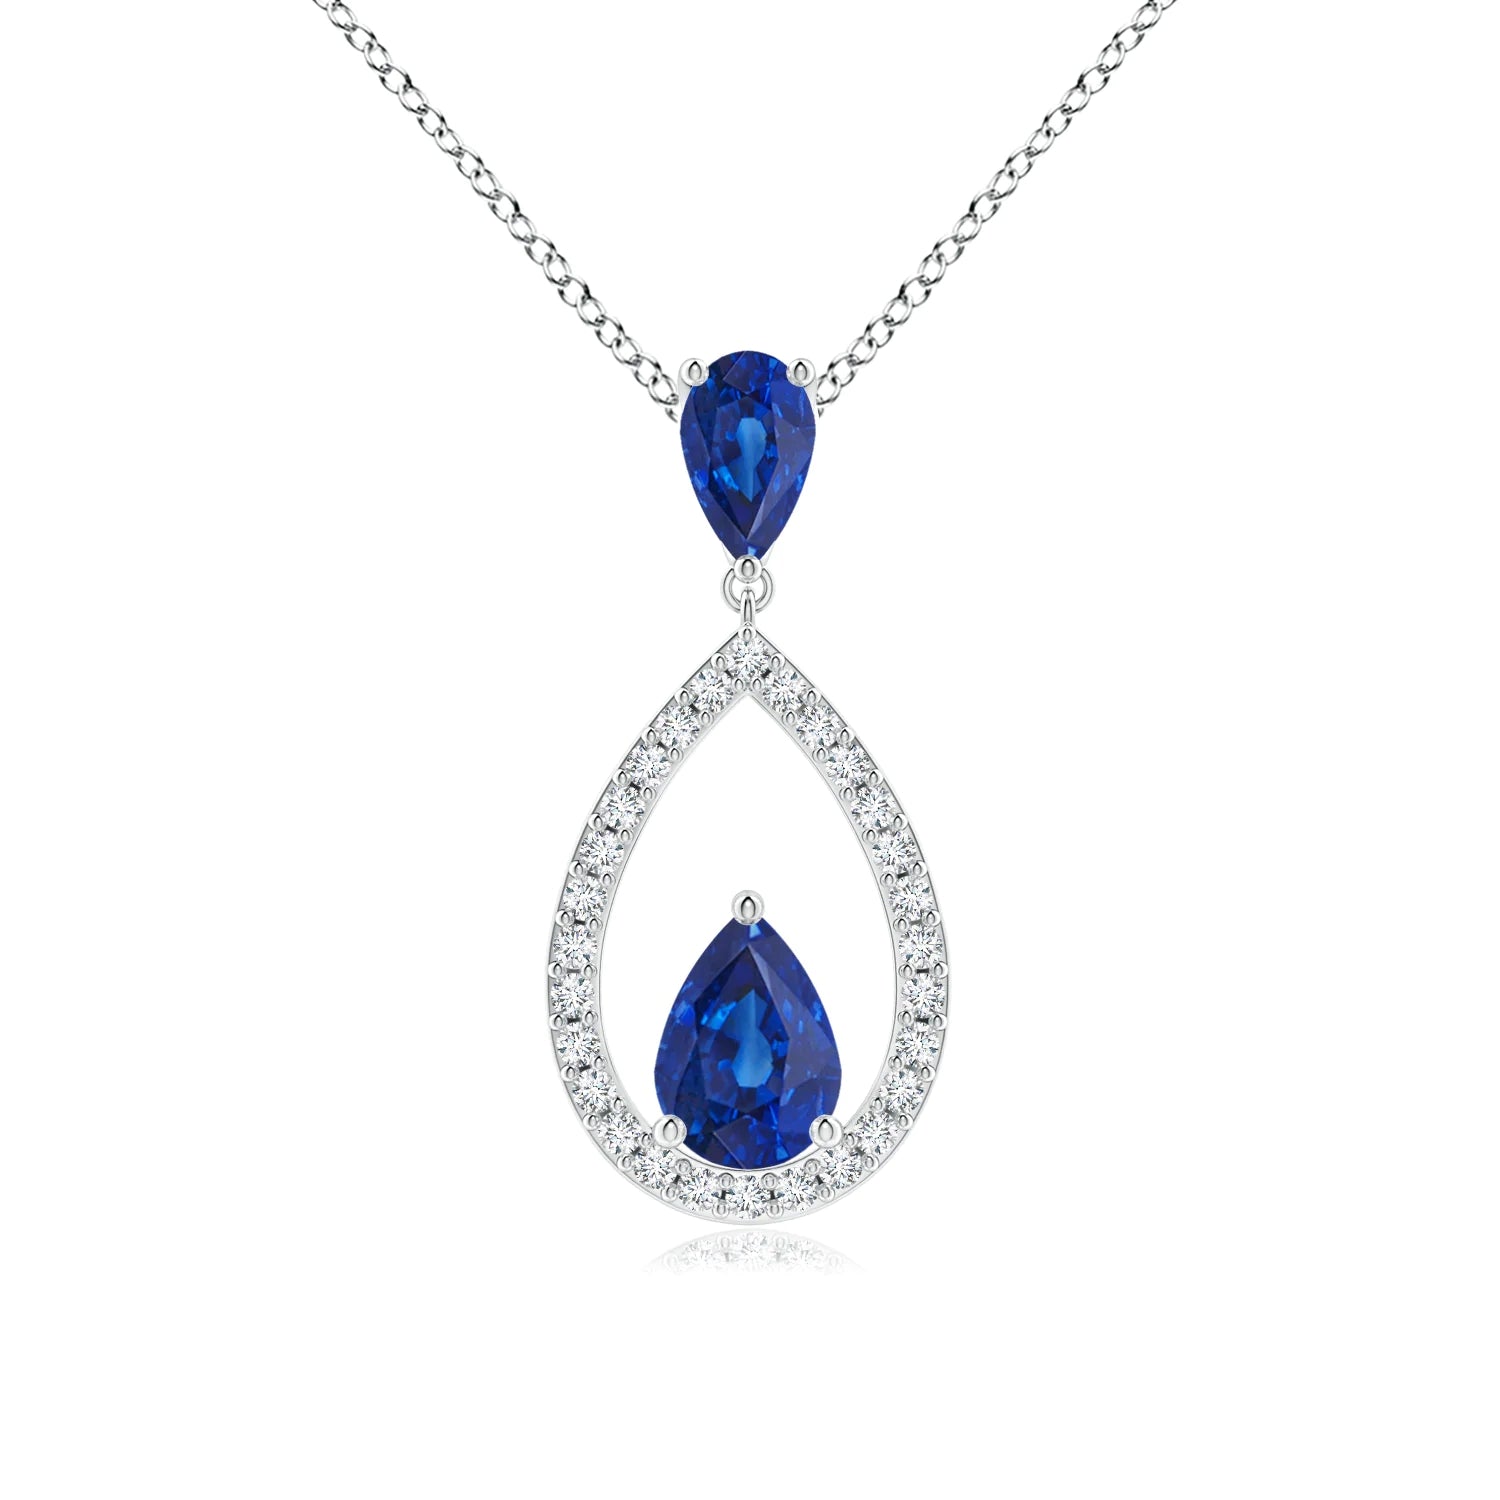 1.64 CT. Blue Sapphire and White Sapphire Drop Pendant